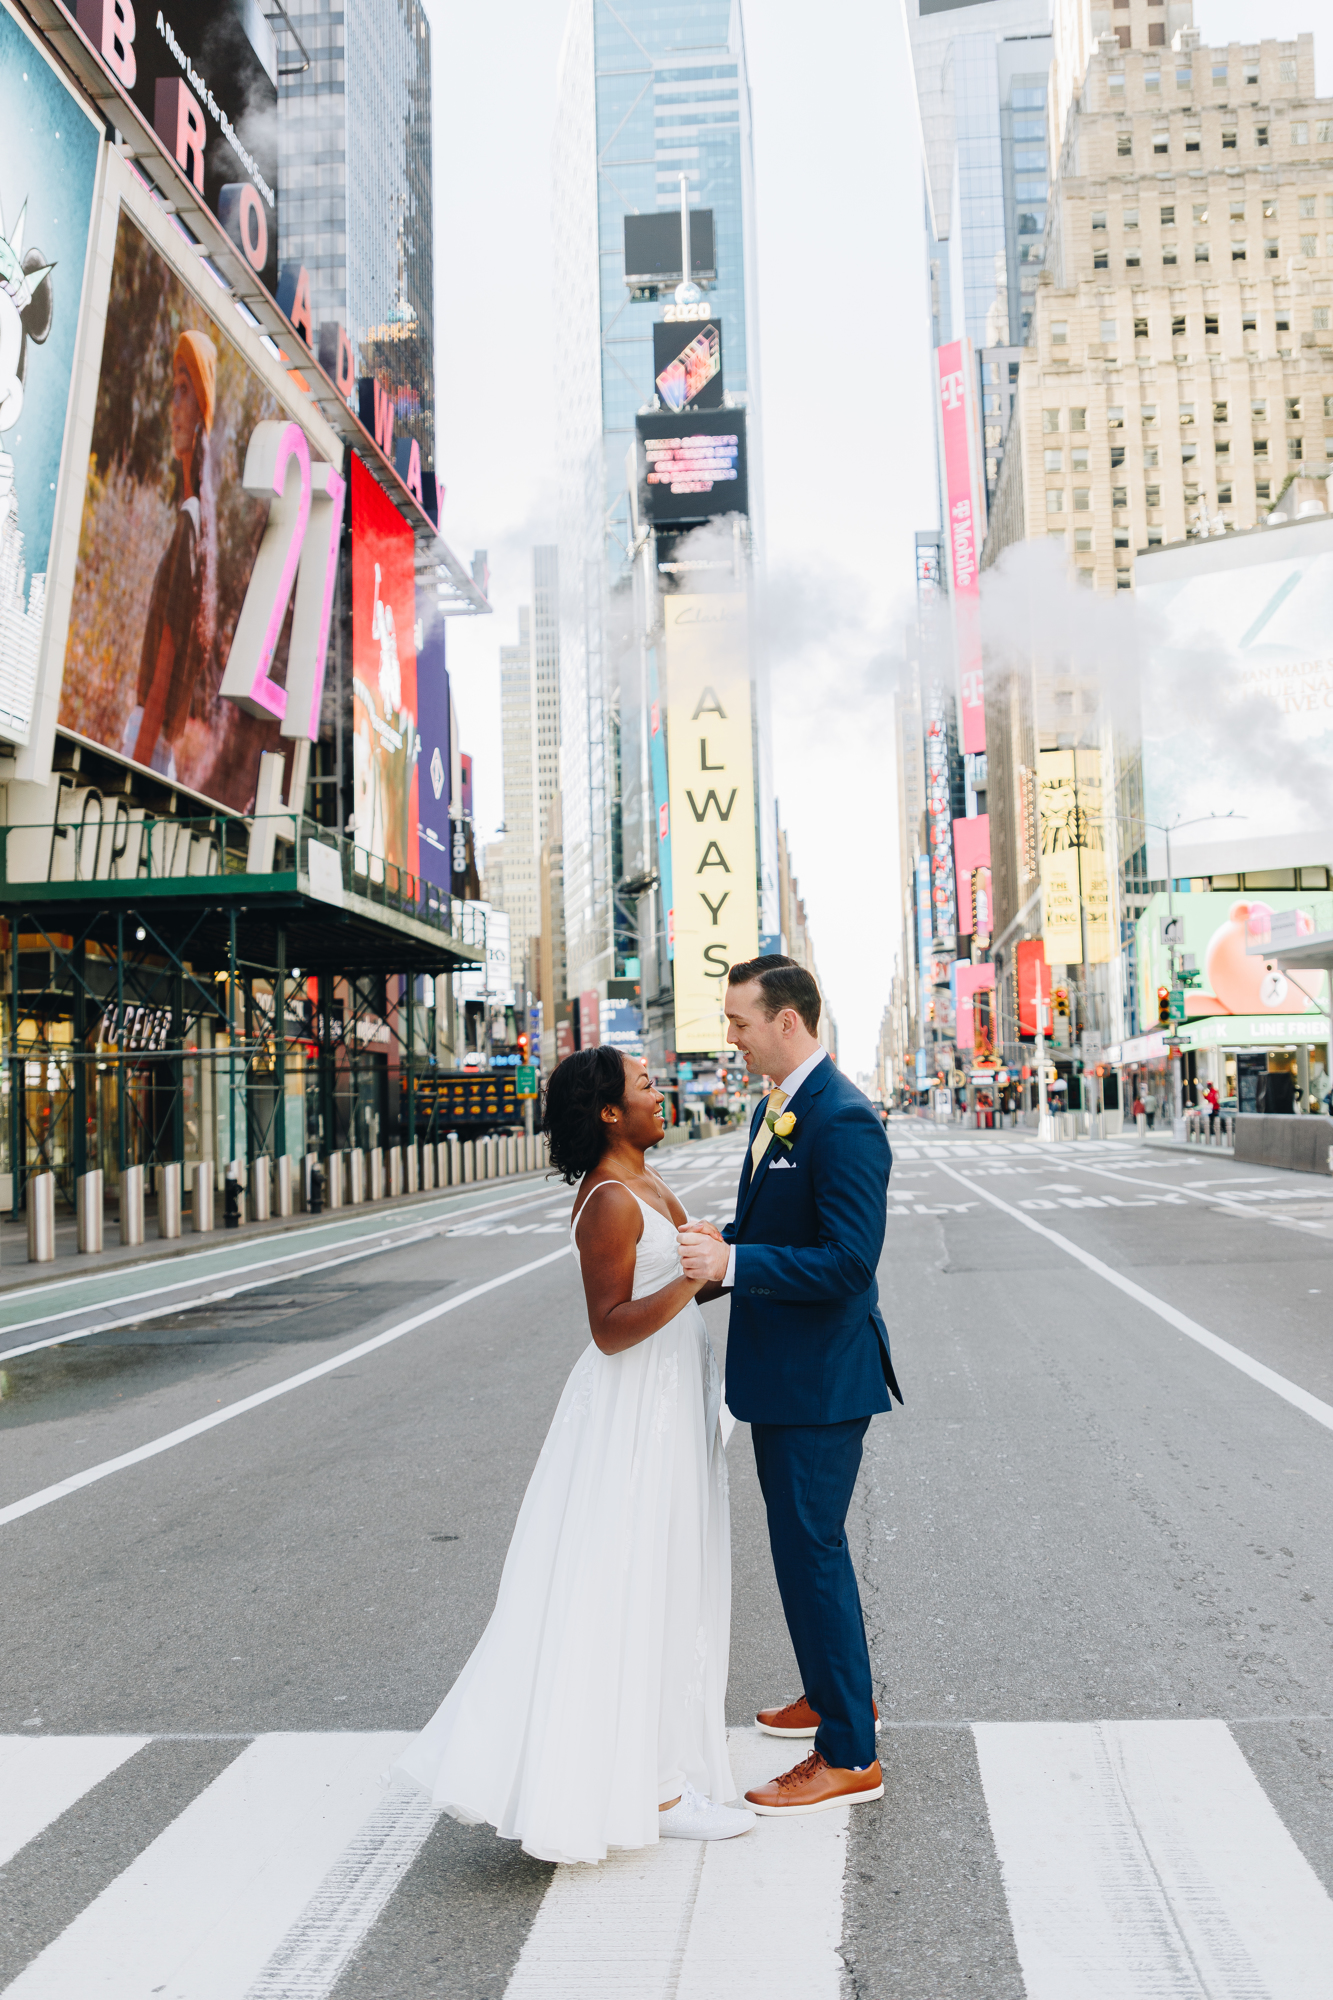 Fun Times Square Wedding Photos in New York